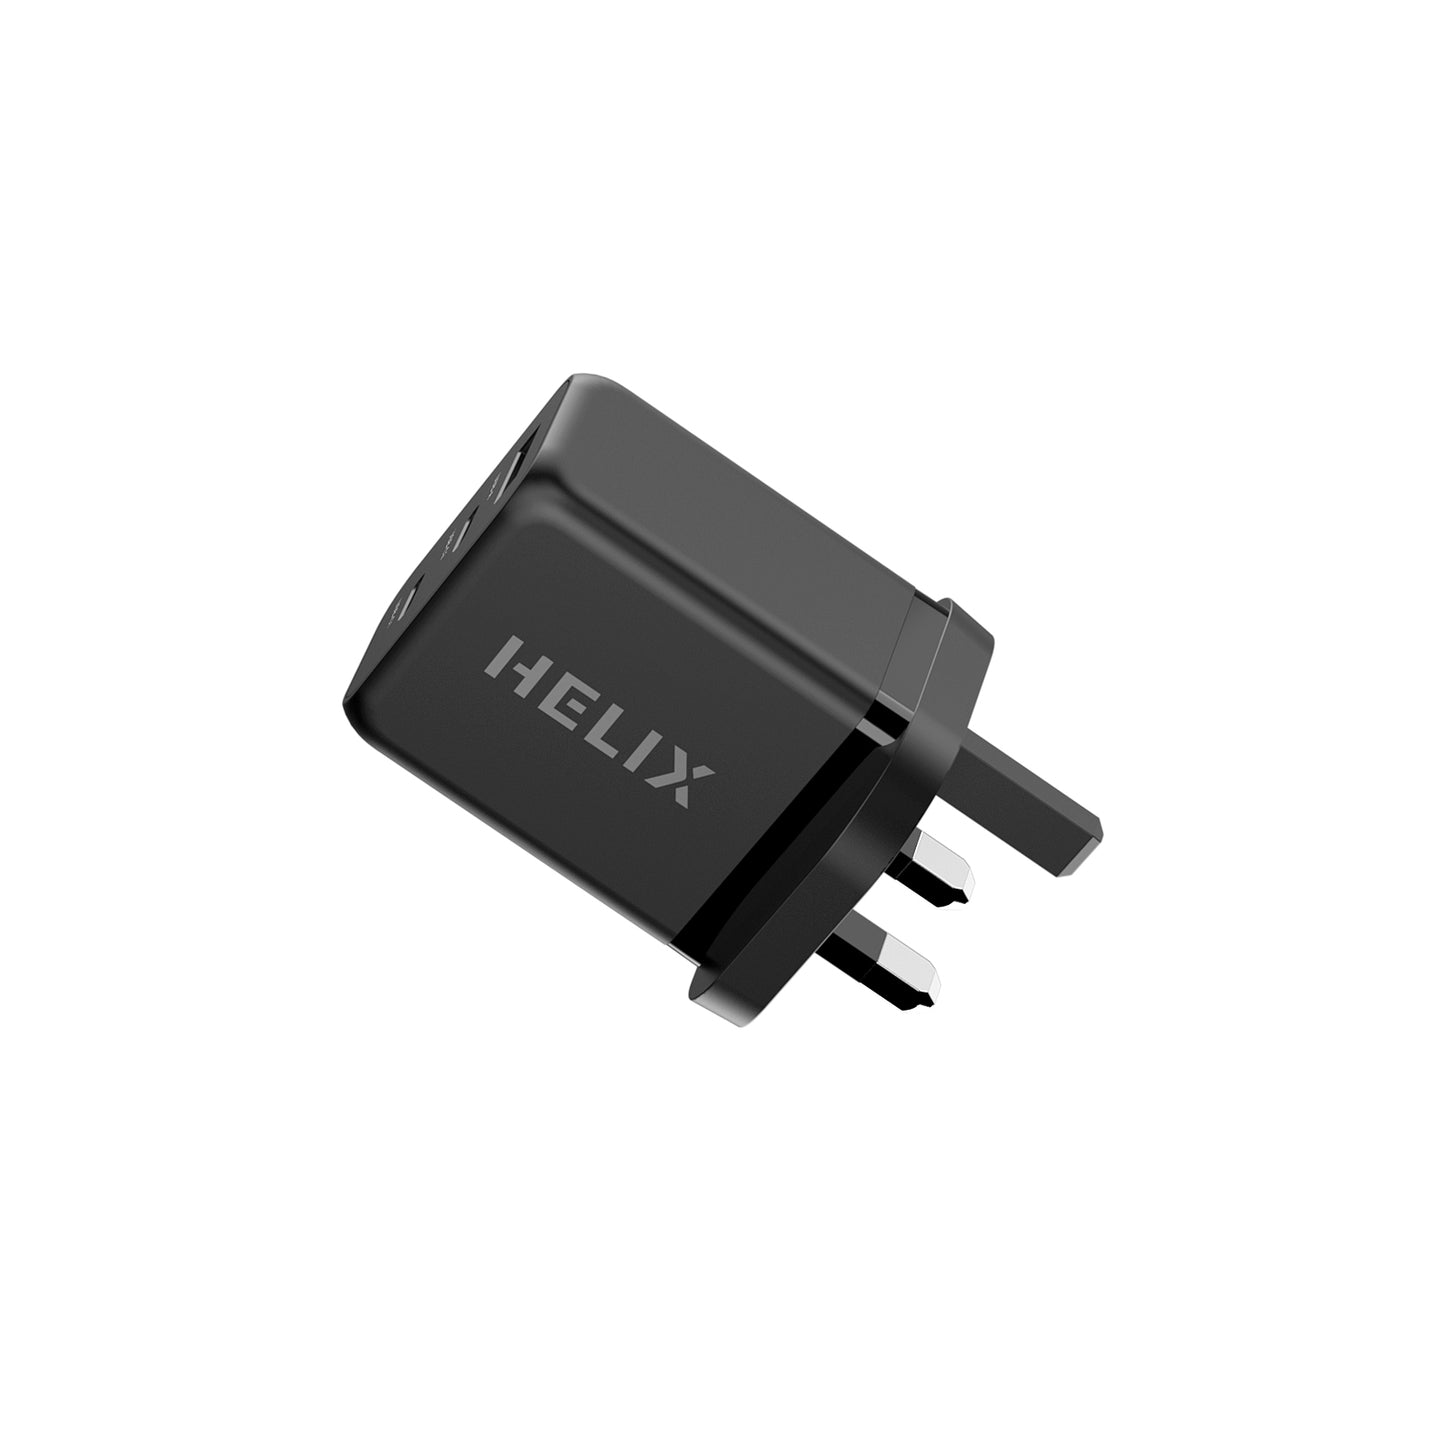 HELIX 65W Ultra Fast Compact GaN Trio Port PD USB-C+QC USB-A Wall CharHELIXHELIX